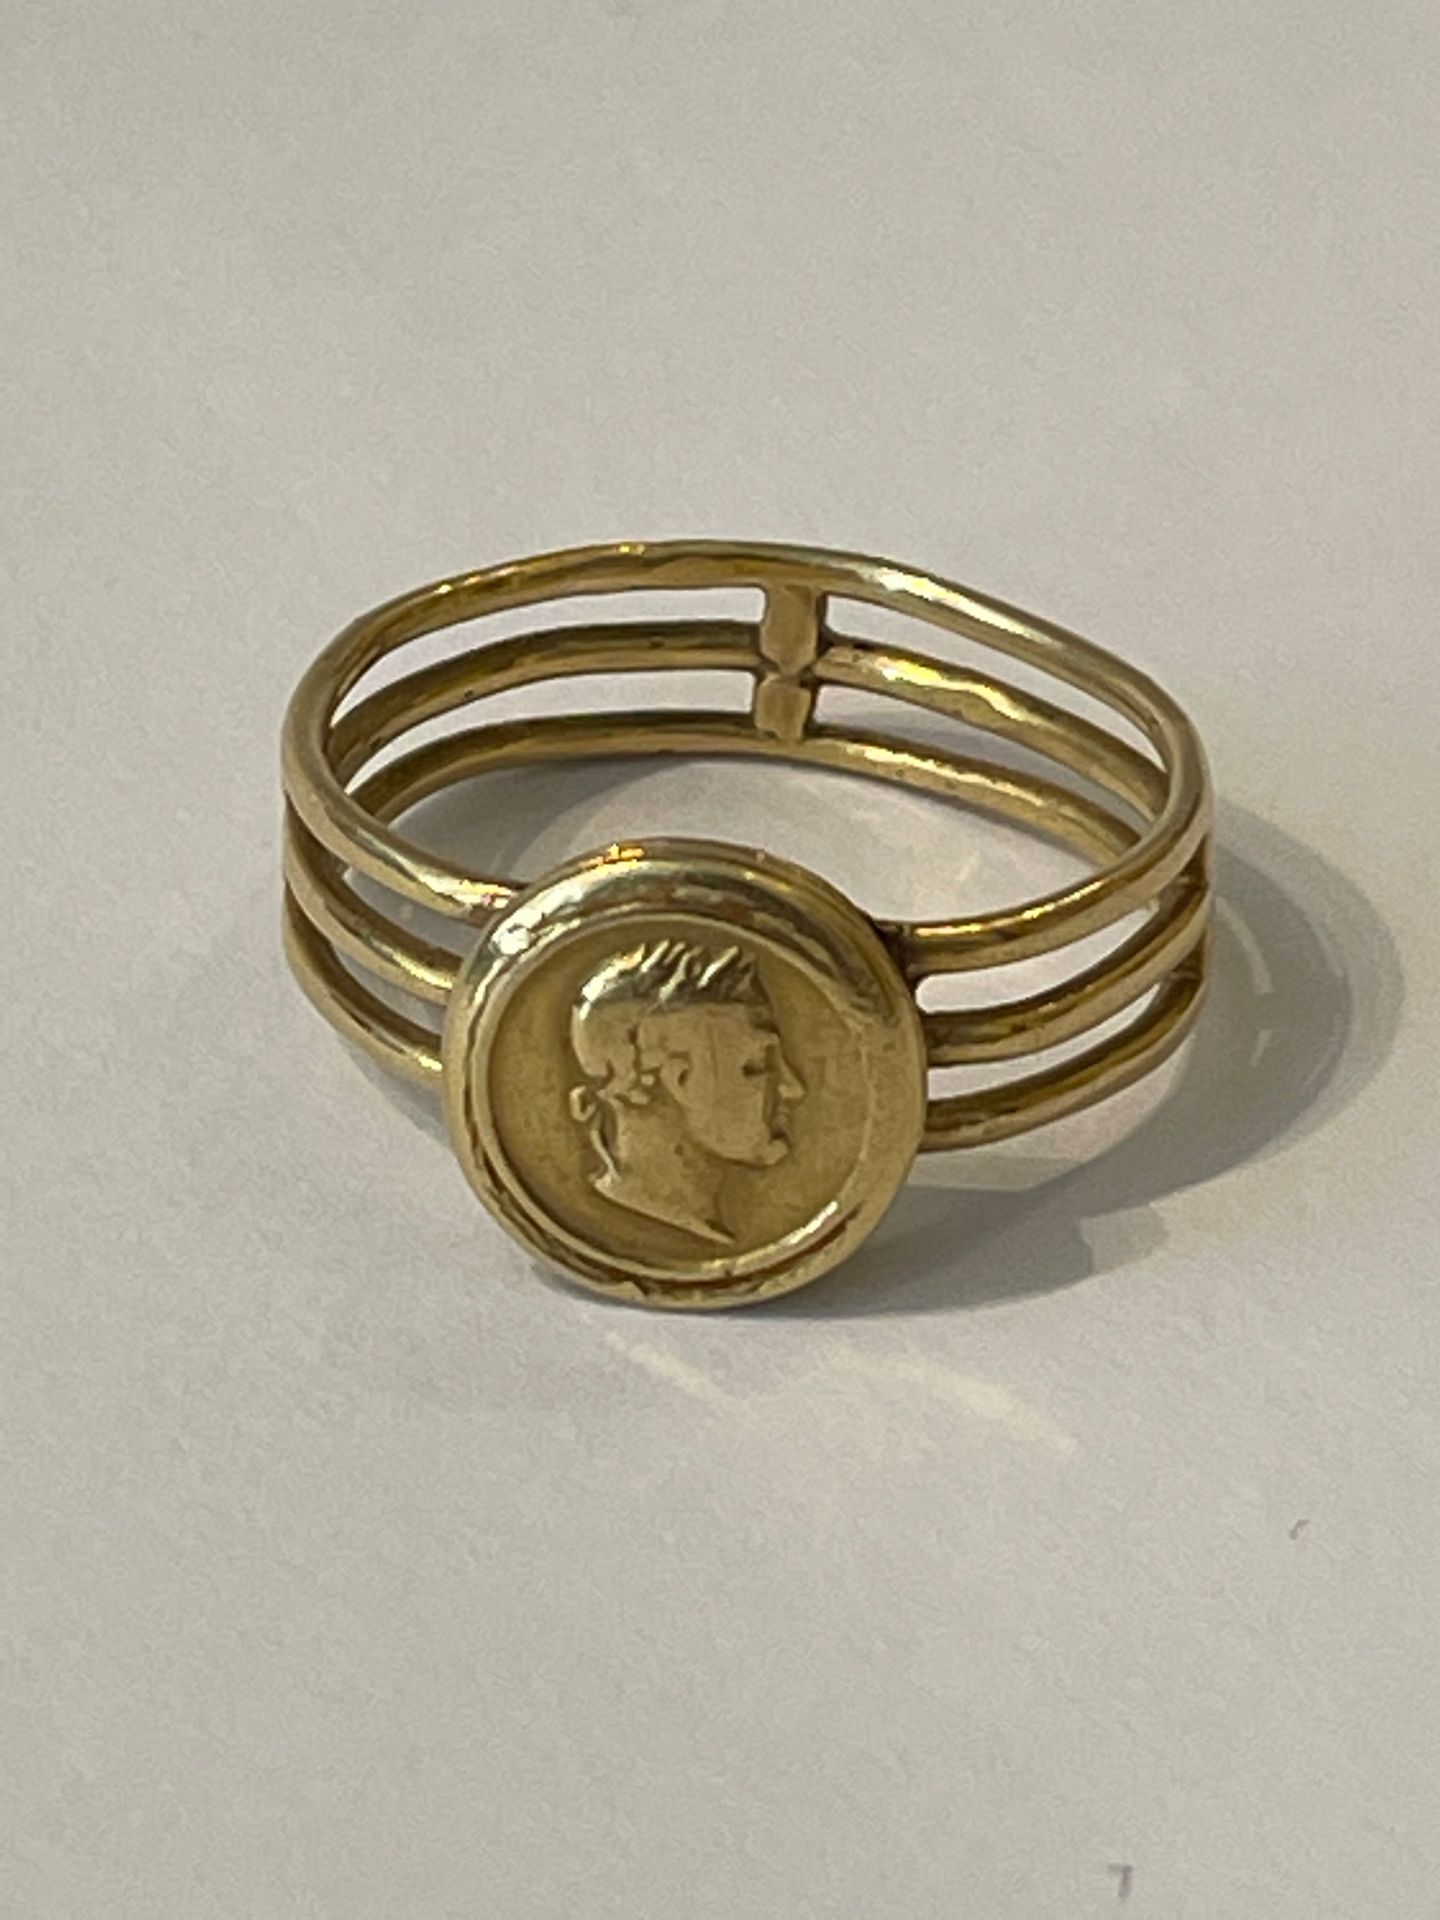 Null 带有亚历山大一世肖像的金戒指

这种类型的戒指在学习结束时颁发给察尔科塞尔斯基中学的学生。

重量 : 6,4 克

直径：2.2厘米



ЕРСТ&hellip;